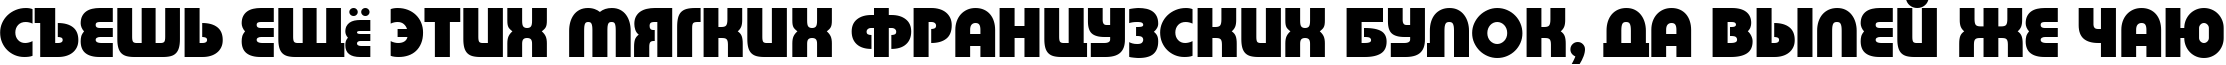 Пример написания шрифтом a_BighausTitul ExtraBold текста на русском